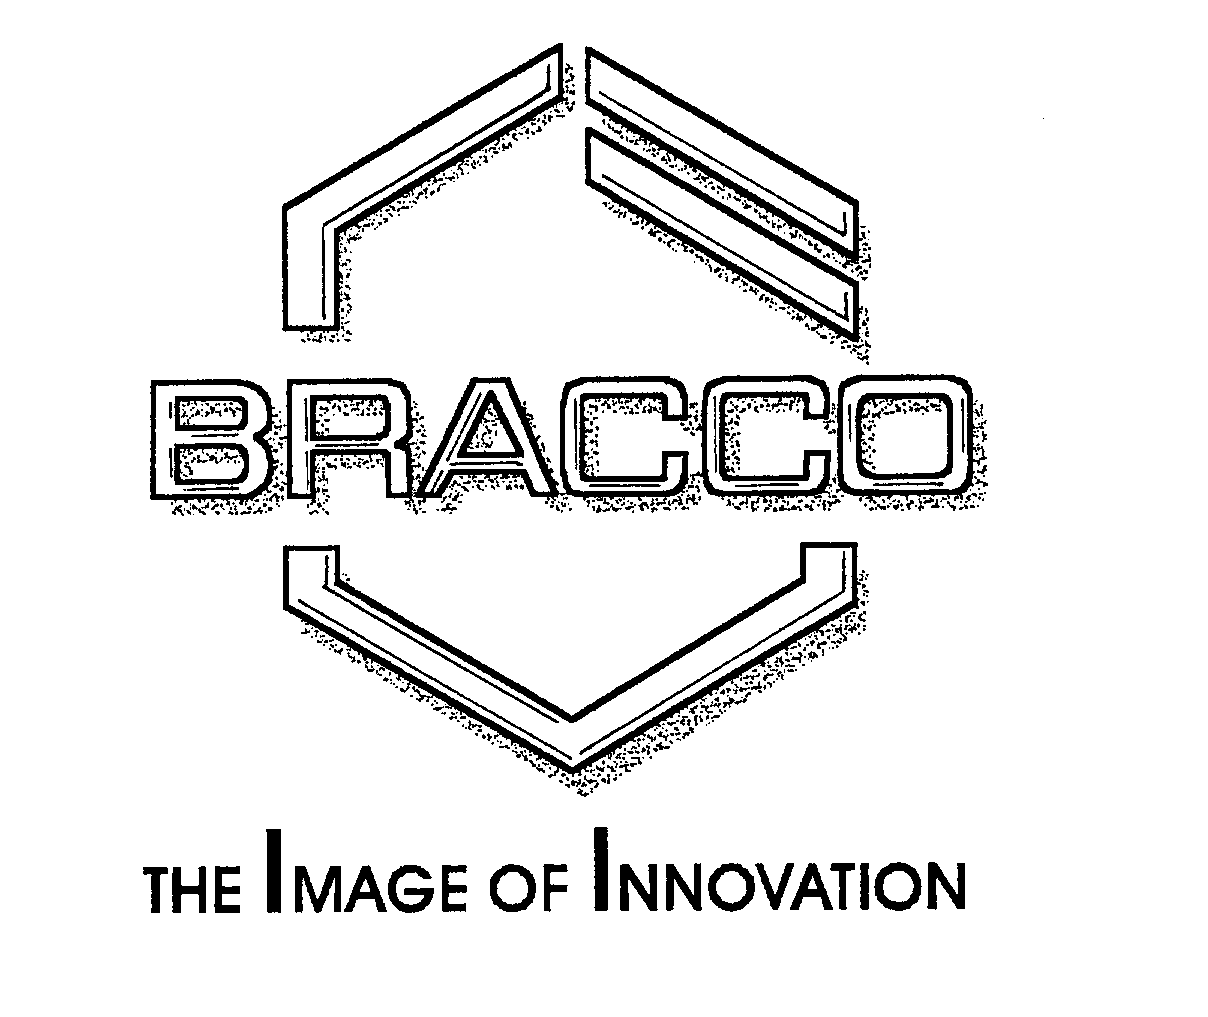  BRACCO THE IMAGE OF INNOVATION